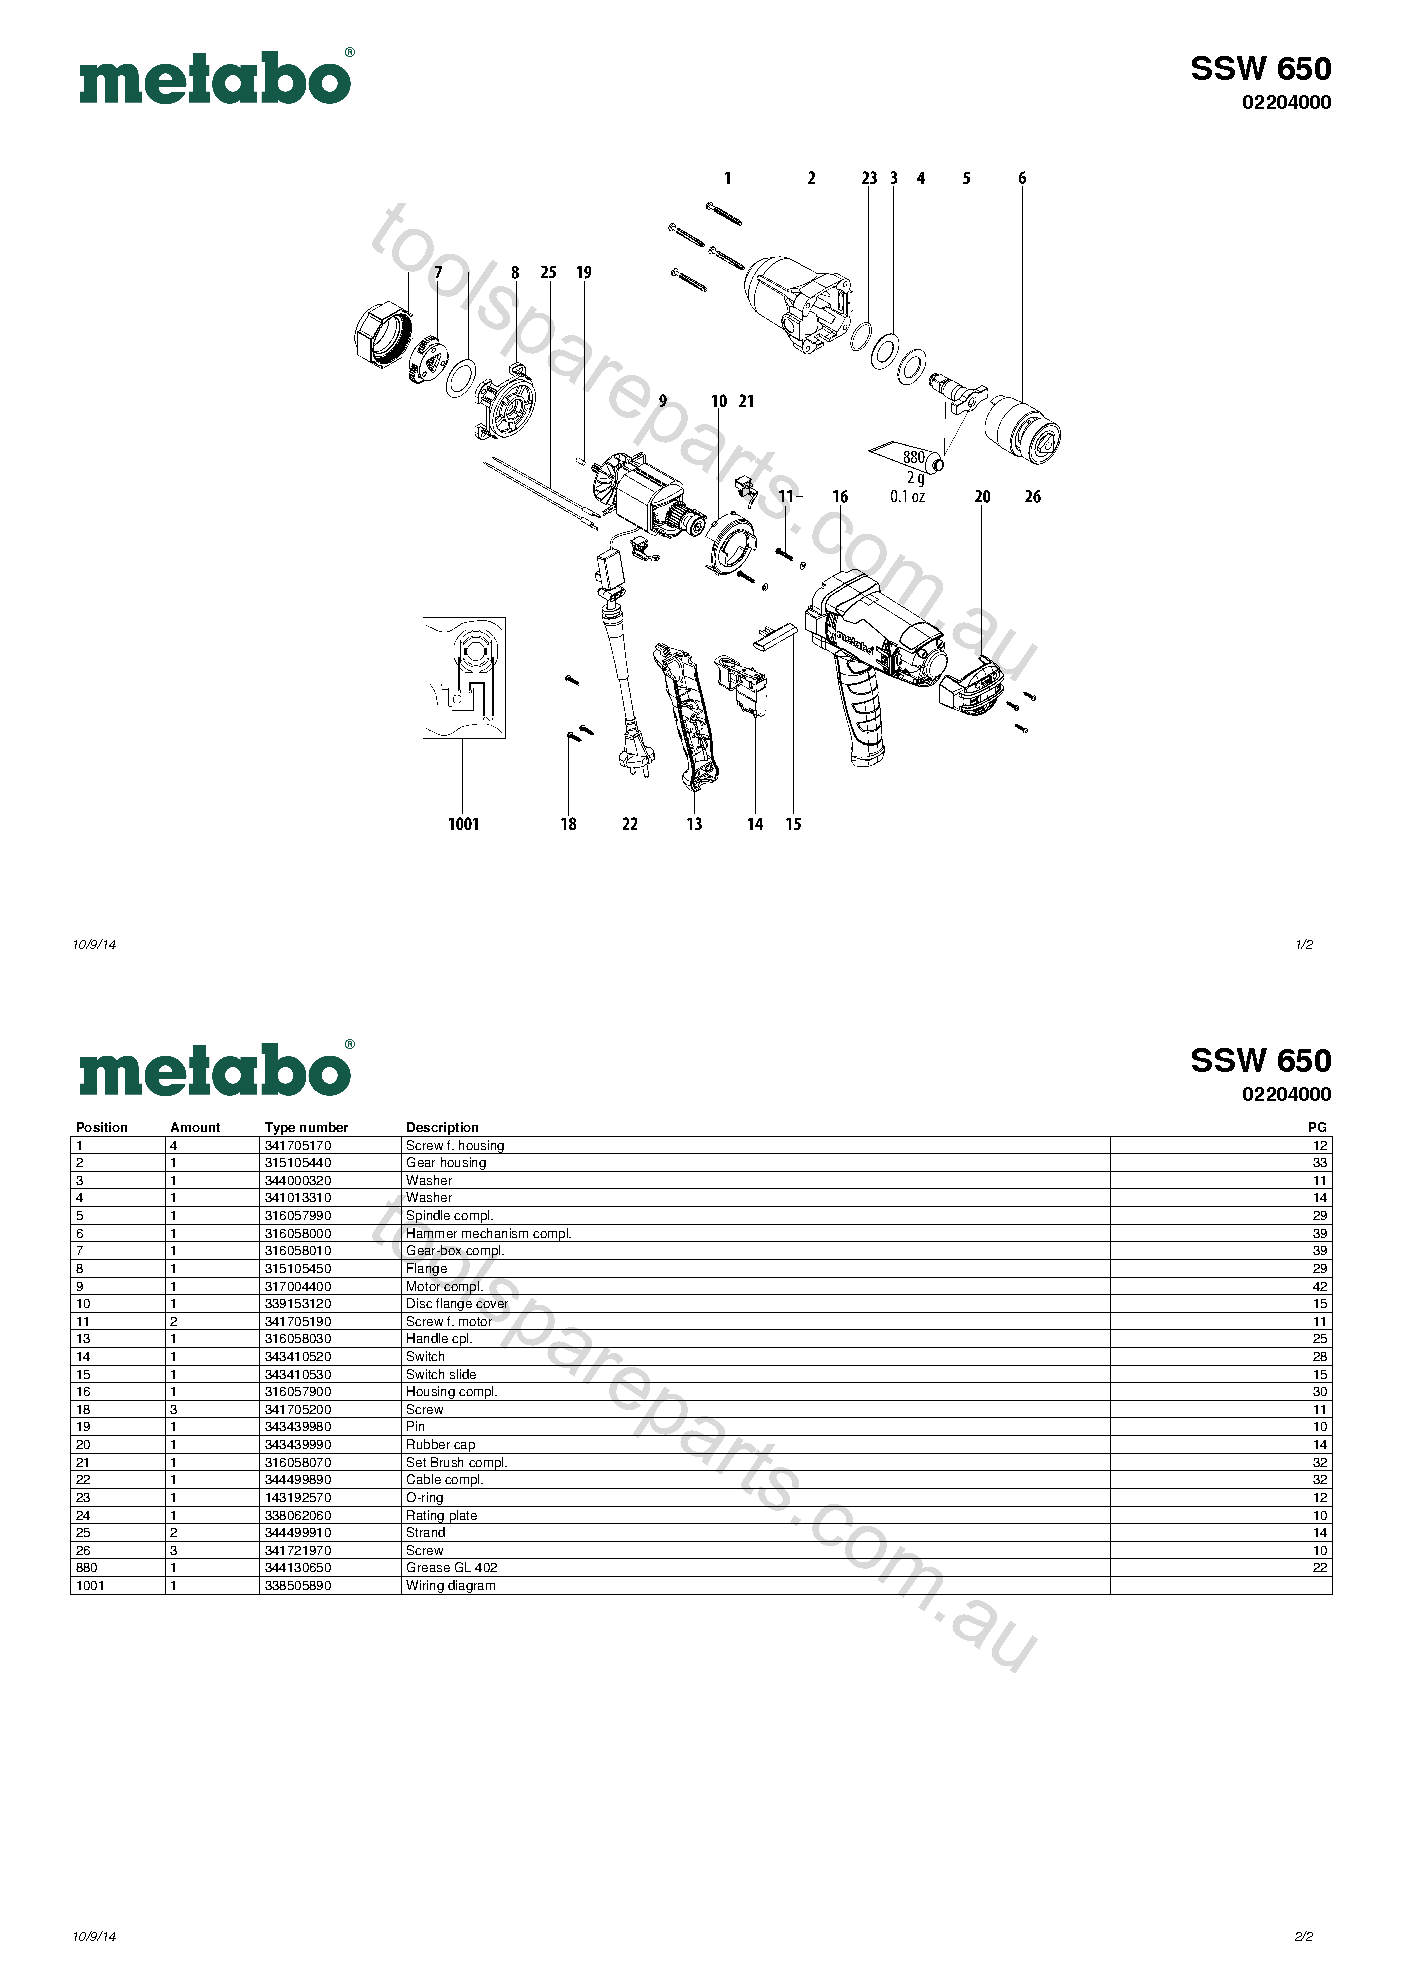 Metabo SSW 650 02204000  Diagram 1